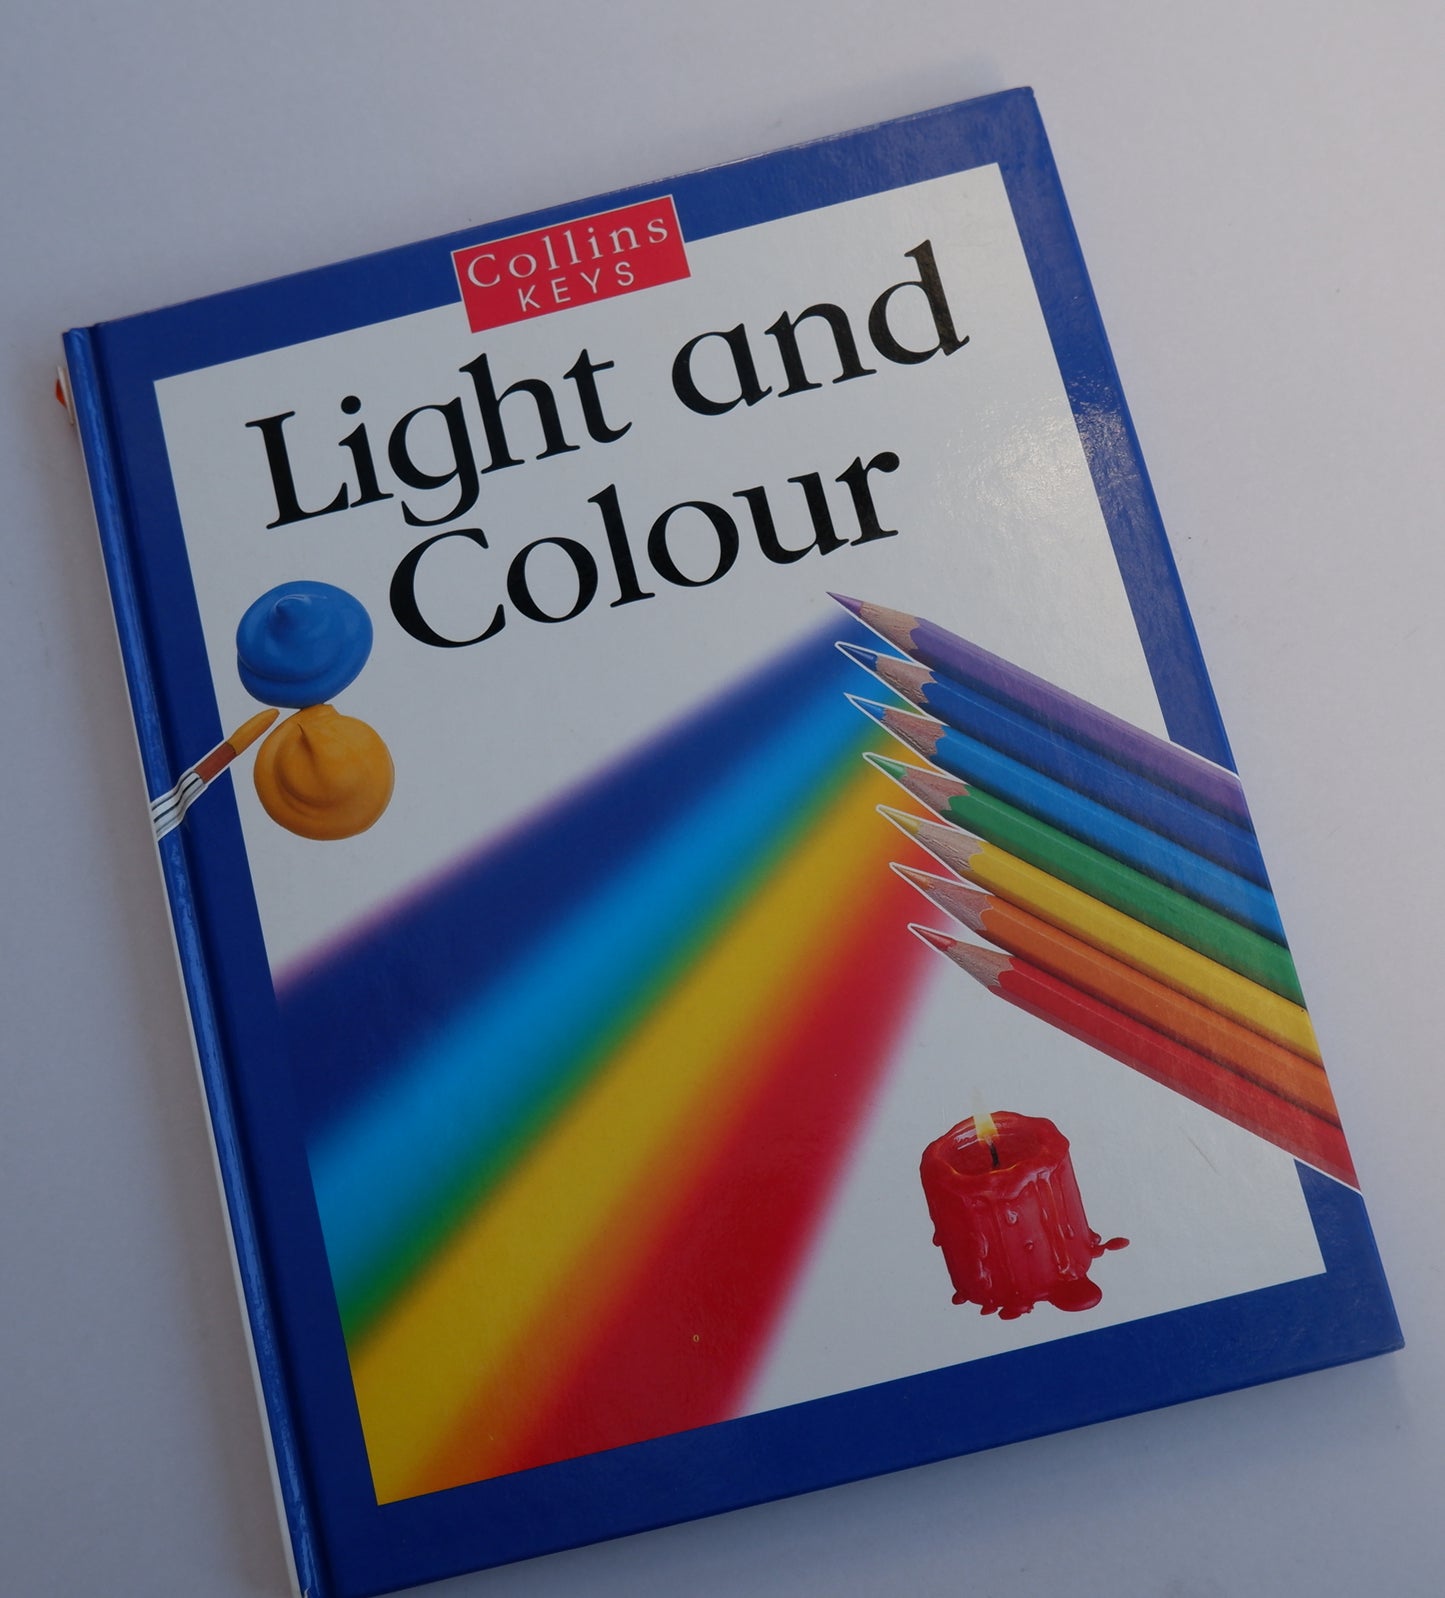 Light and Colour (Collins Keys)